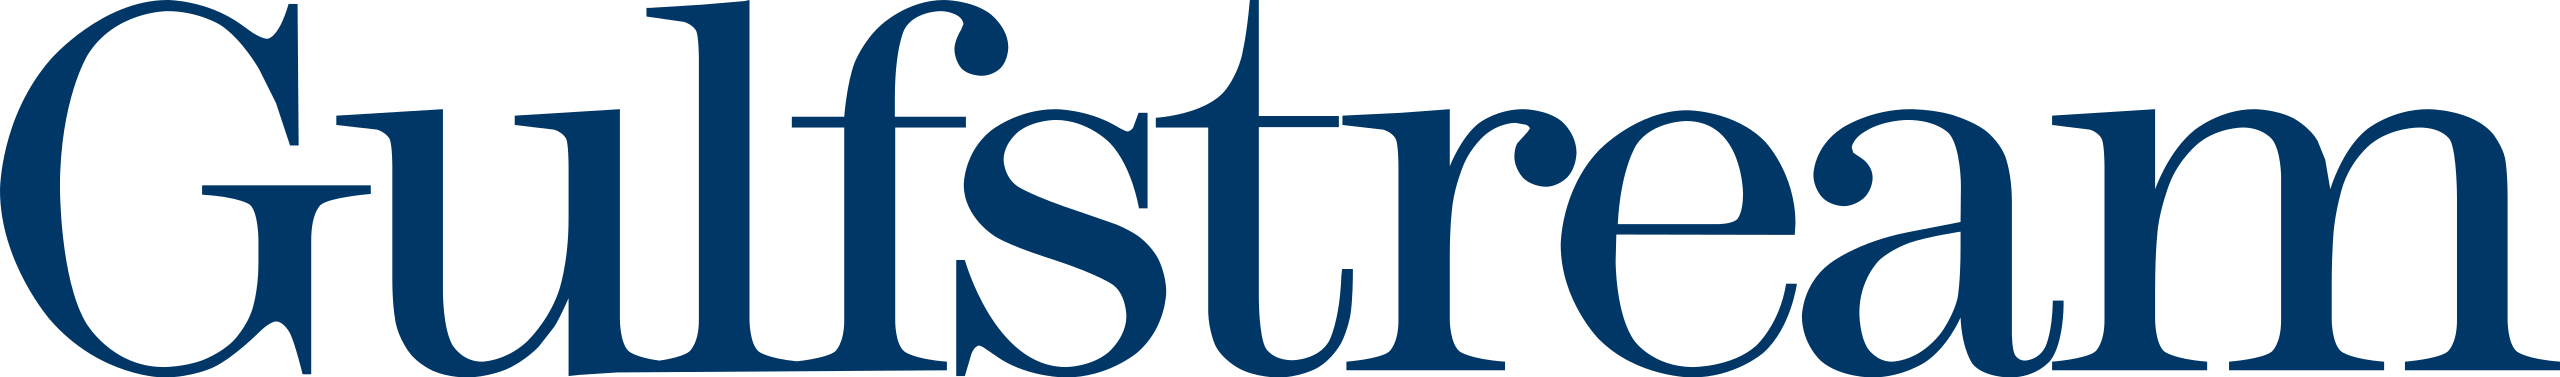 Gulfstream_Aerospace_logo.svg